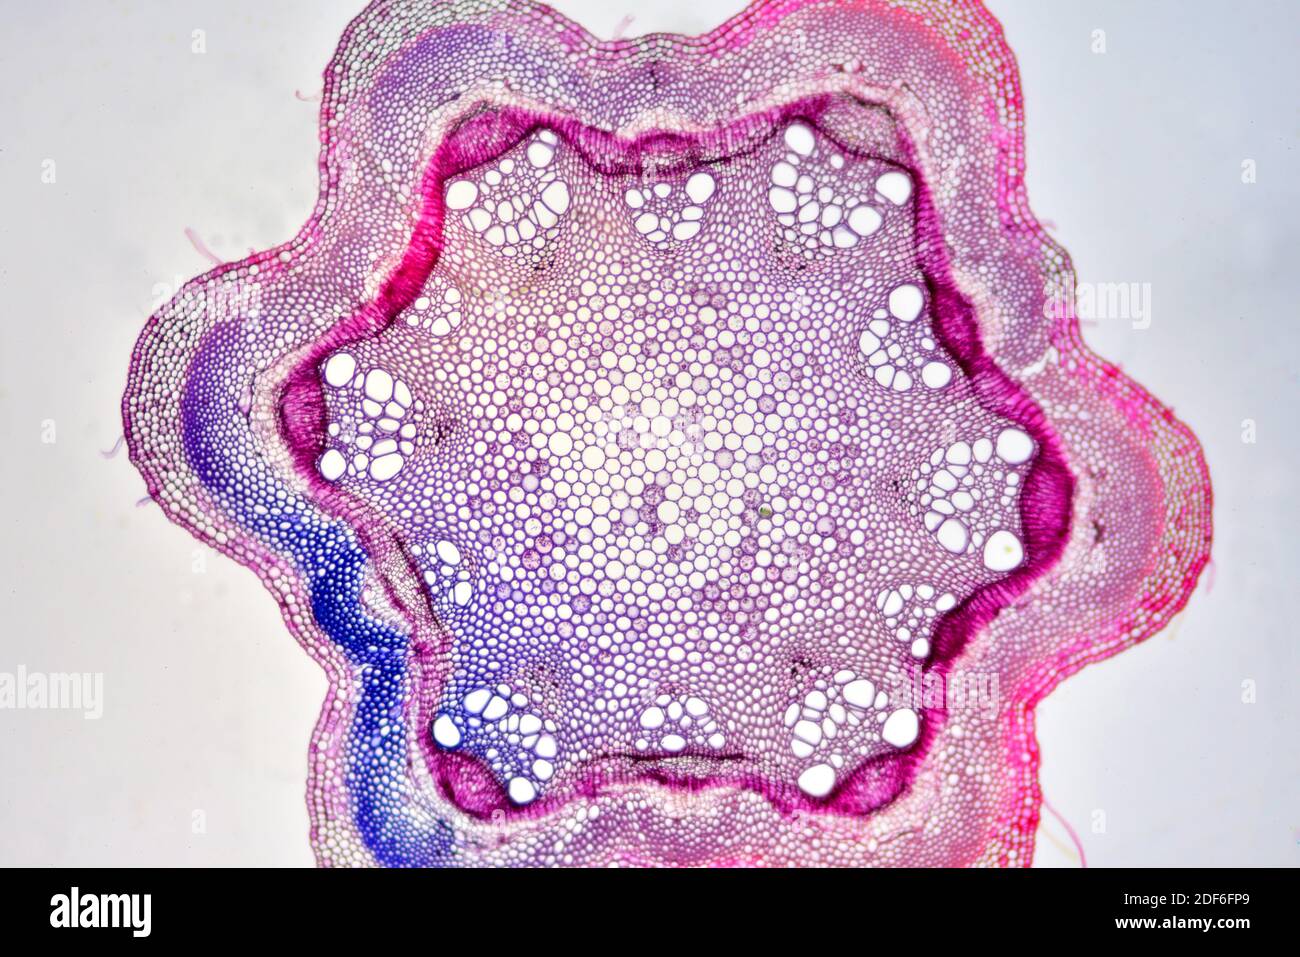 Eudicot stem (Clematis sp. ) showing epidermis, collenchyma, cortex, parenchyma, pith, phloem and xylem. Optical microscope X40. Stock Photo